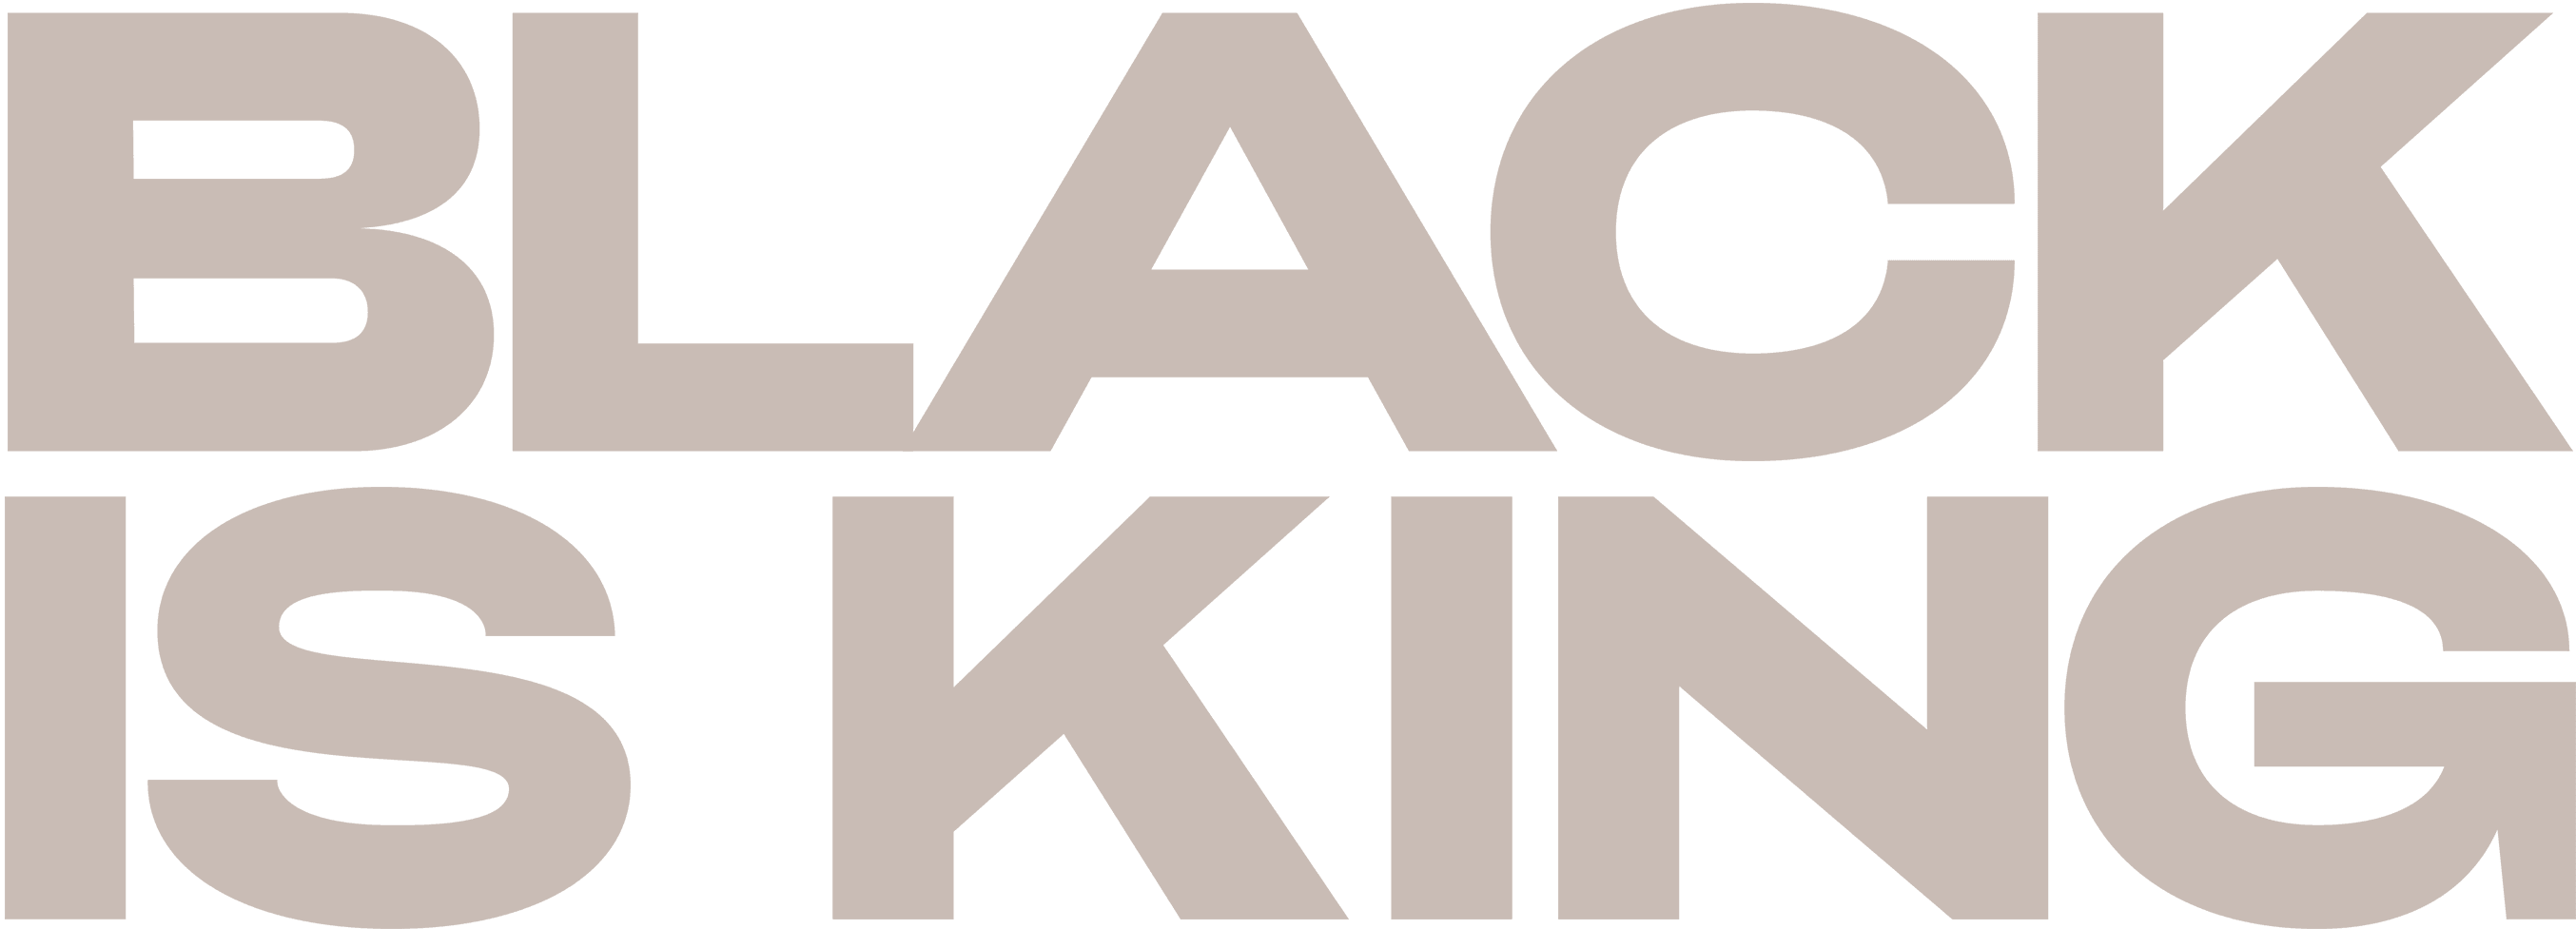 Black Is King logo